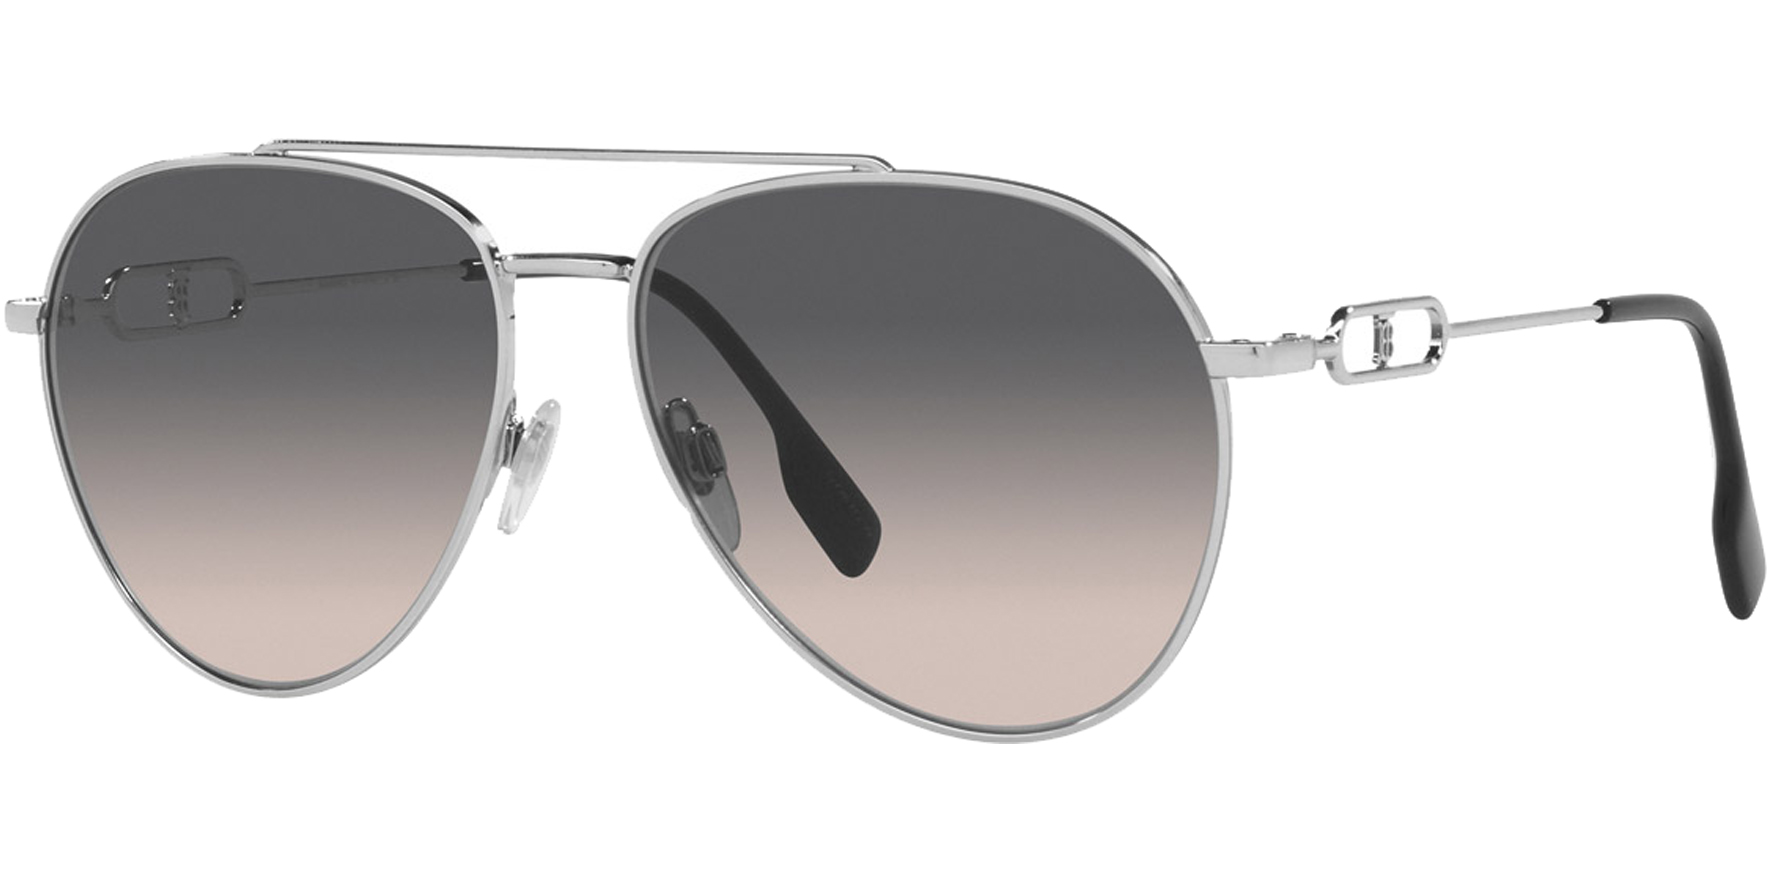 burberry-carmen-aviator-sunglasses-be3128-1005g9-58.jpg